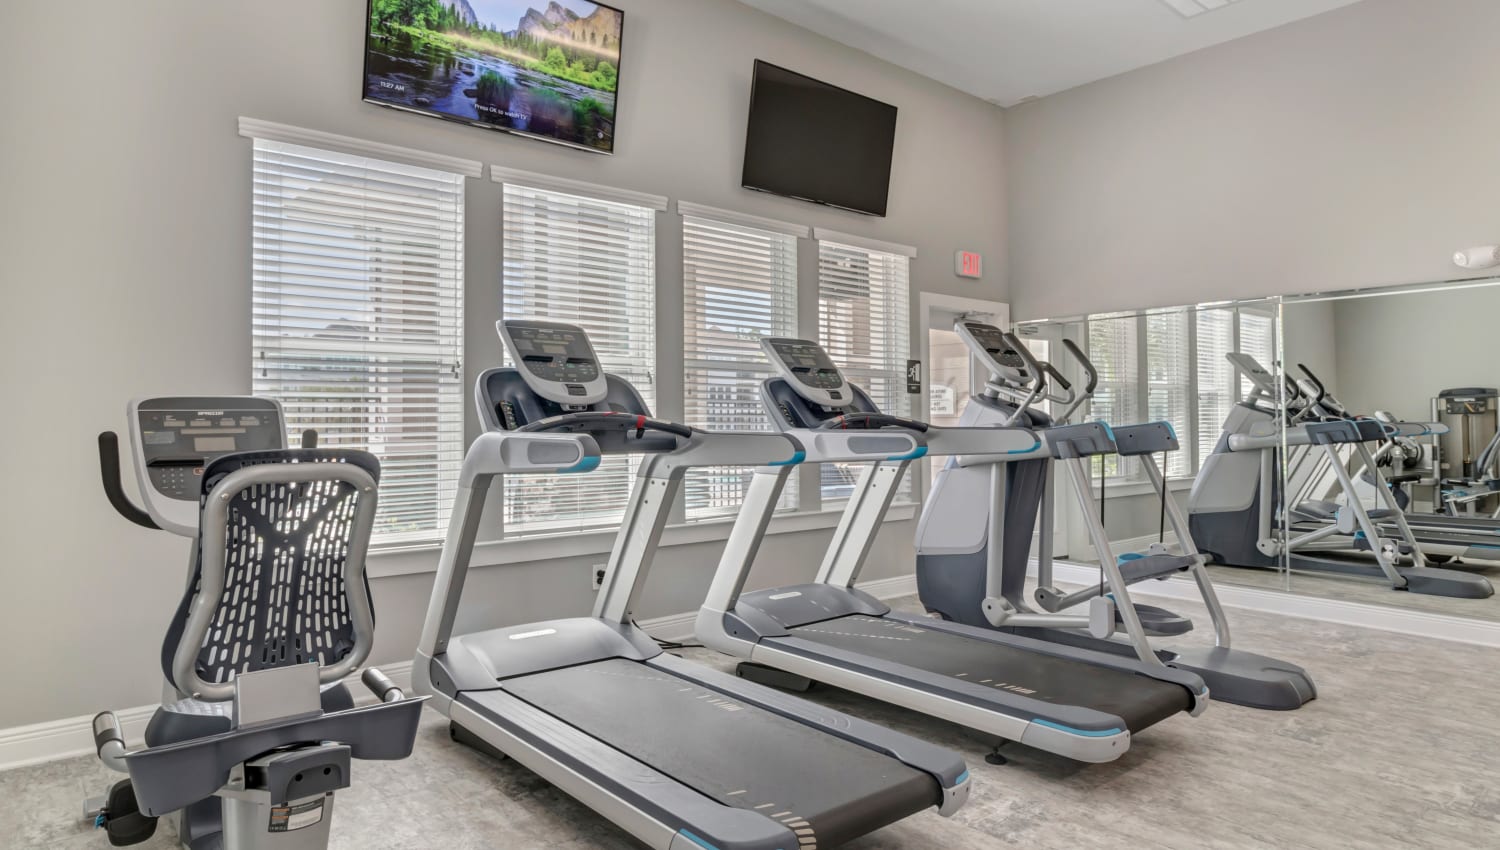 Treadmills in the fitness center at Lakeline at Bartram Park in Jacksonville, Florida